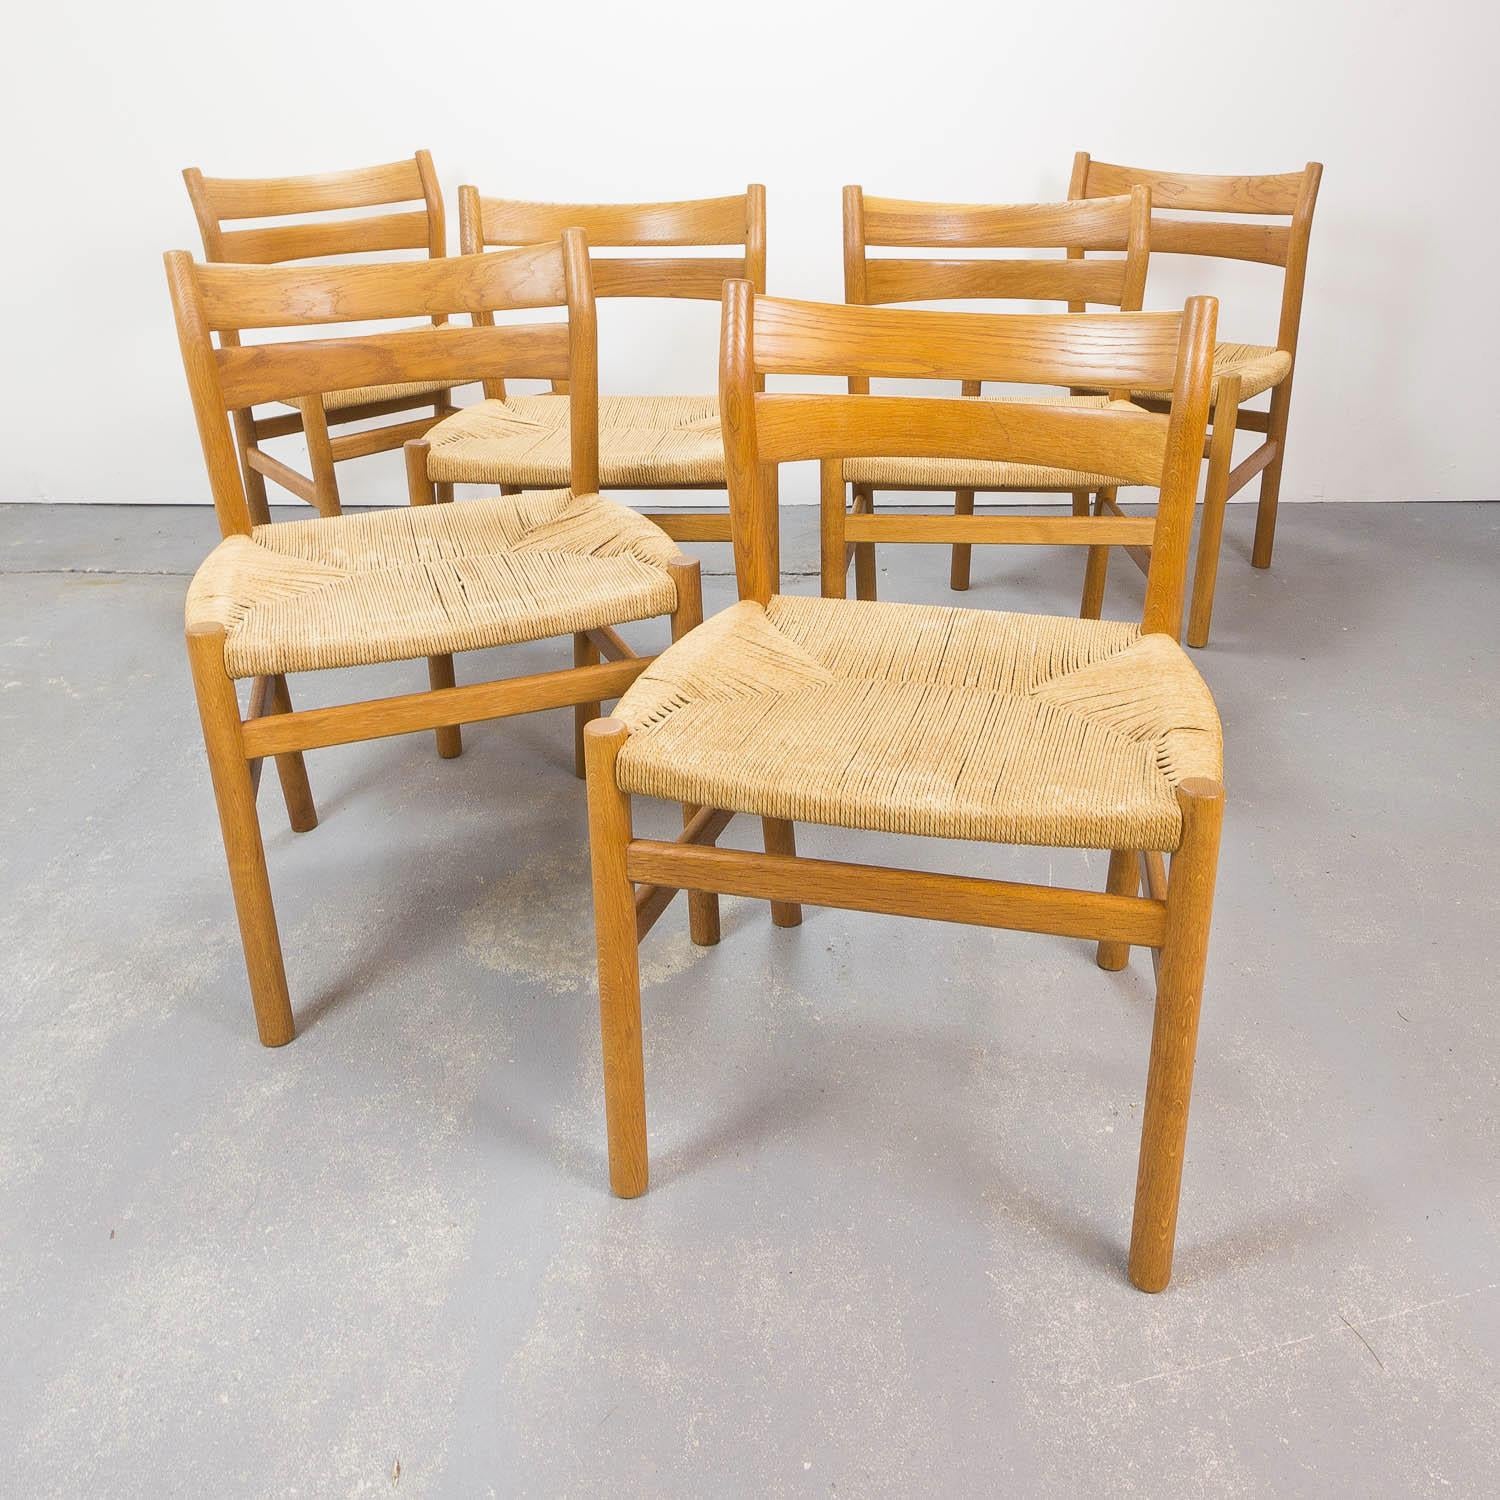 Mid-20th Century Set of 6 BM1 Dining Chairs by Børge Mogensen for CM Madsen, Denmark 1960s